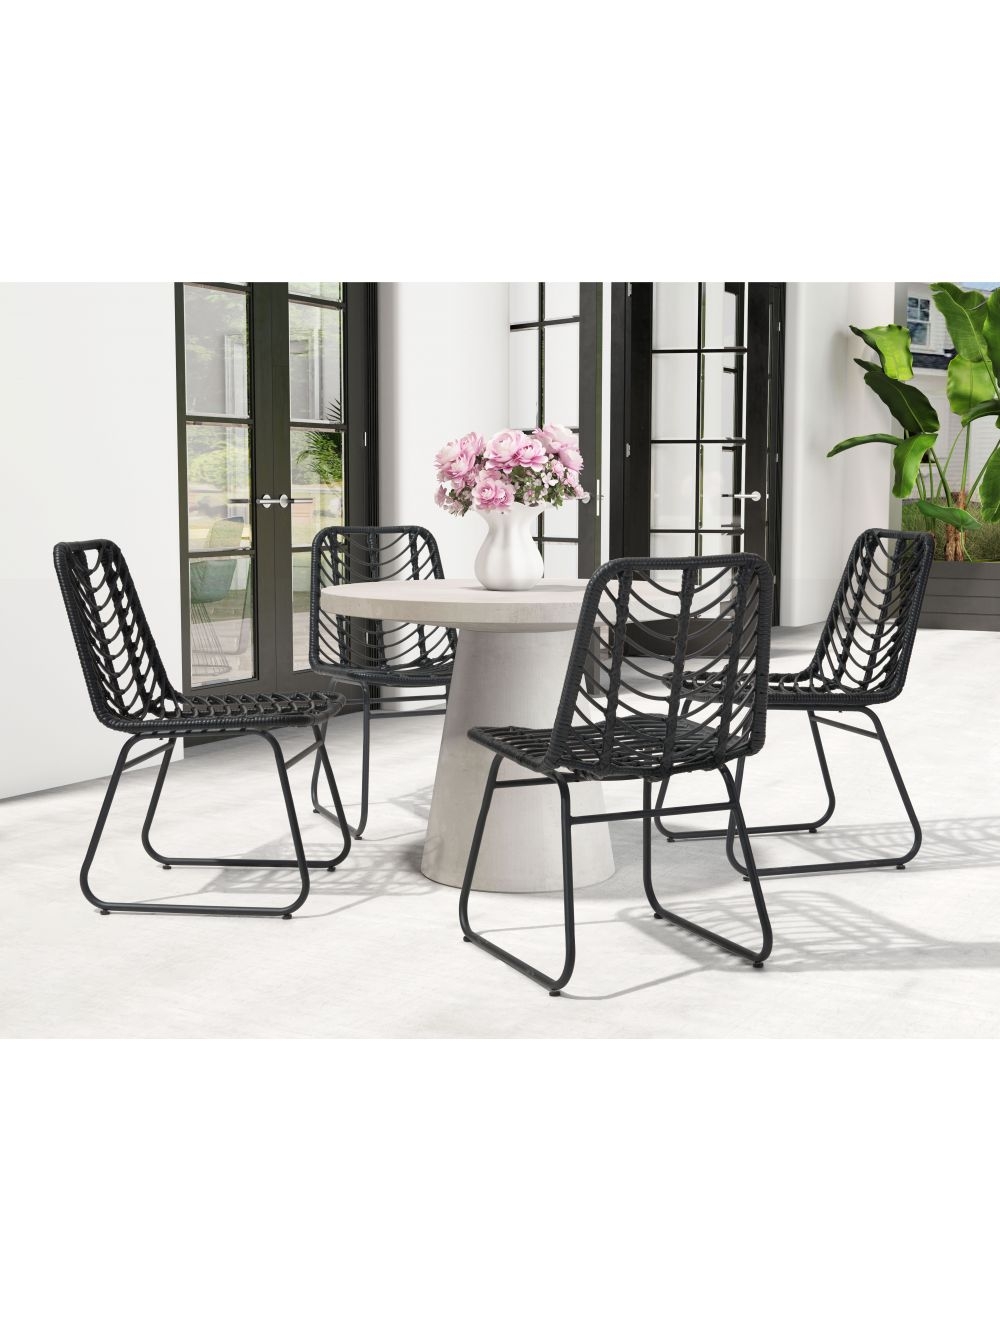 Laporte Dining Chair, Black, Set of 2 - Image 5